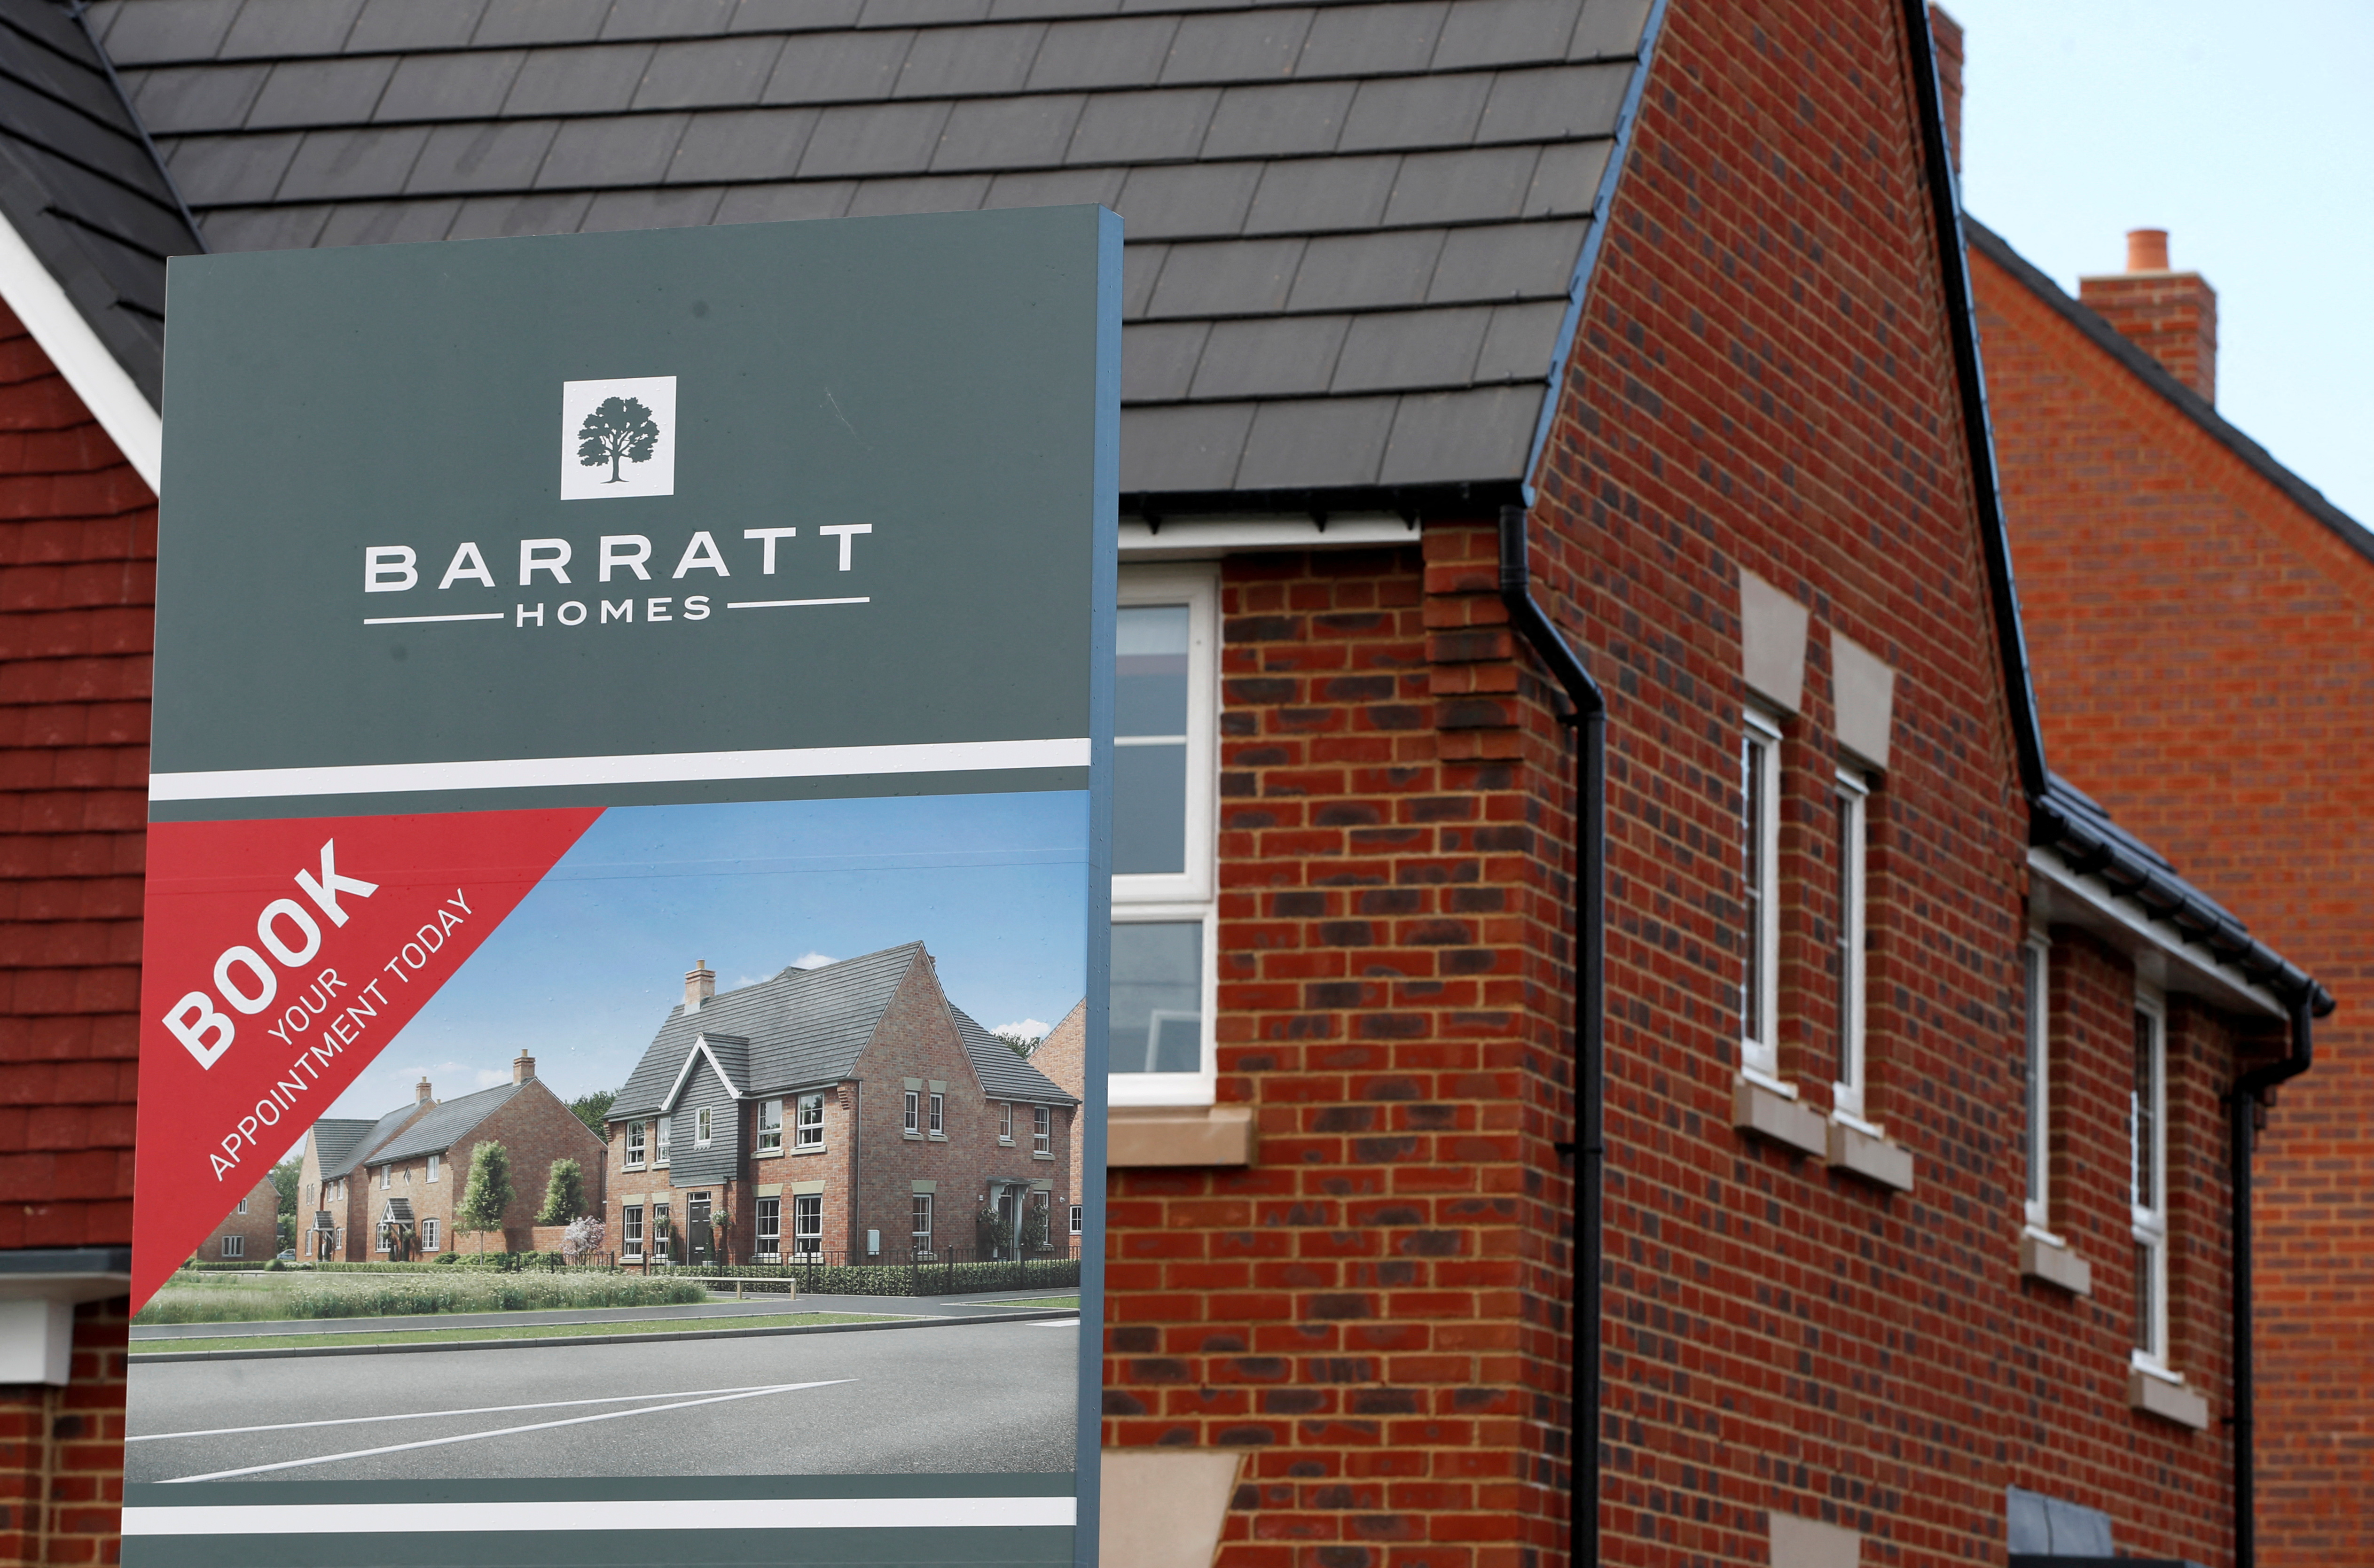 An advertising board of Britain's largest homebuilder Barratt Developments is pictured in Aylesbury